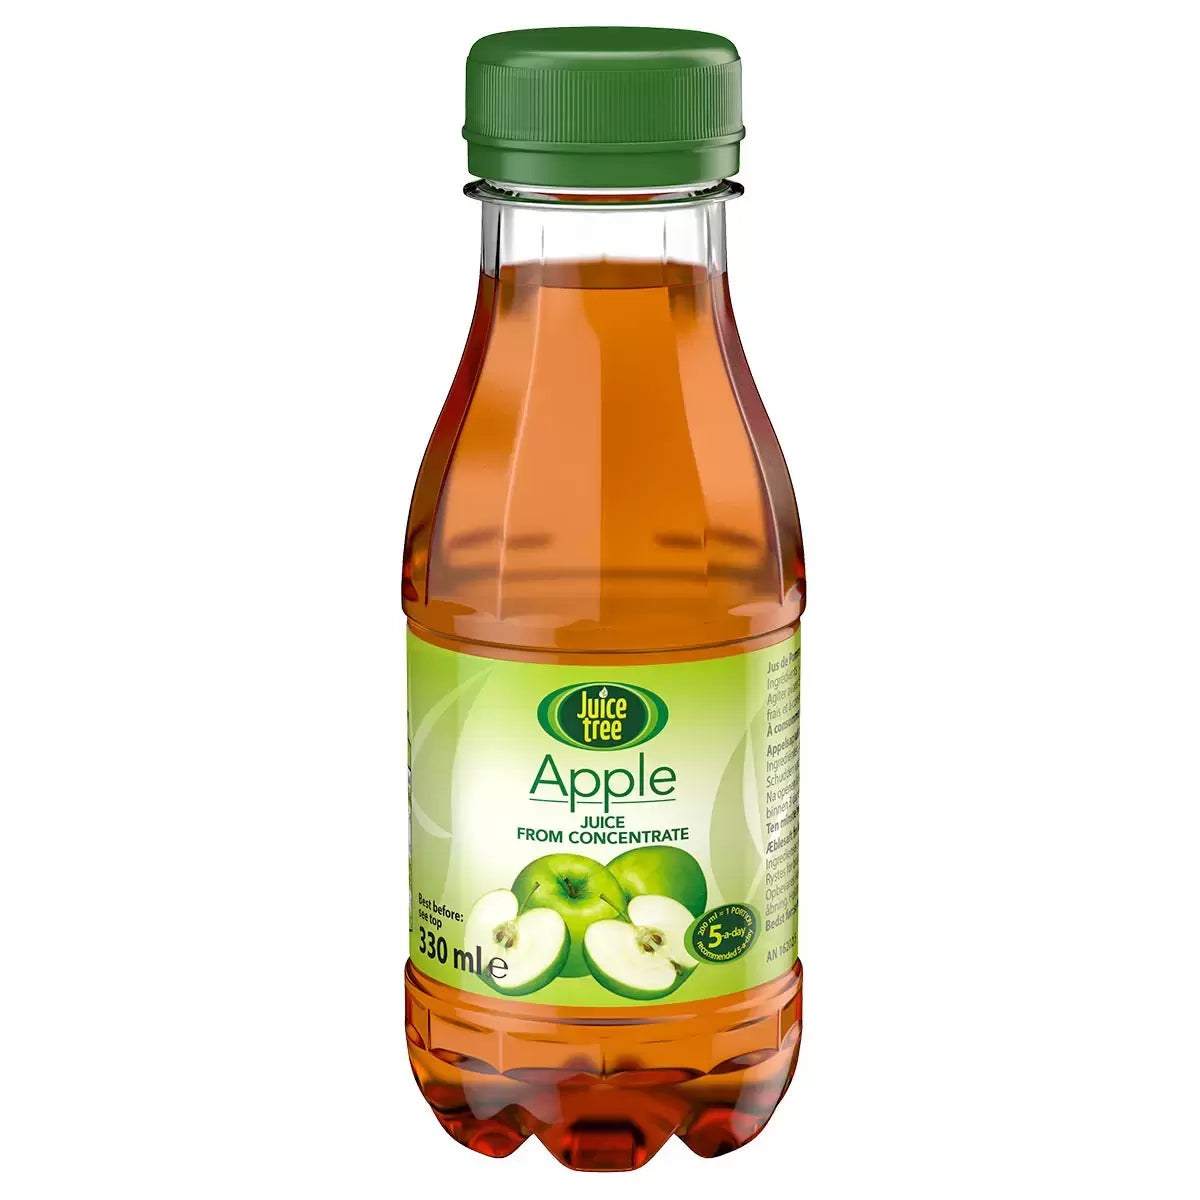 Juice Tree Apple Juice 330ml - Out of Date